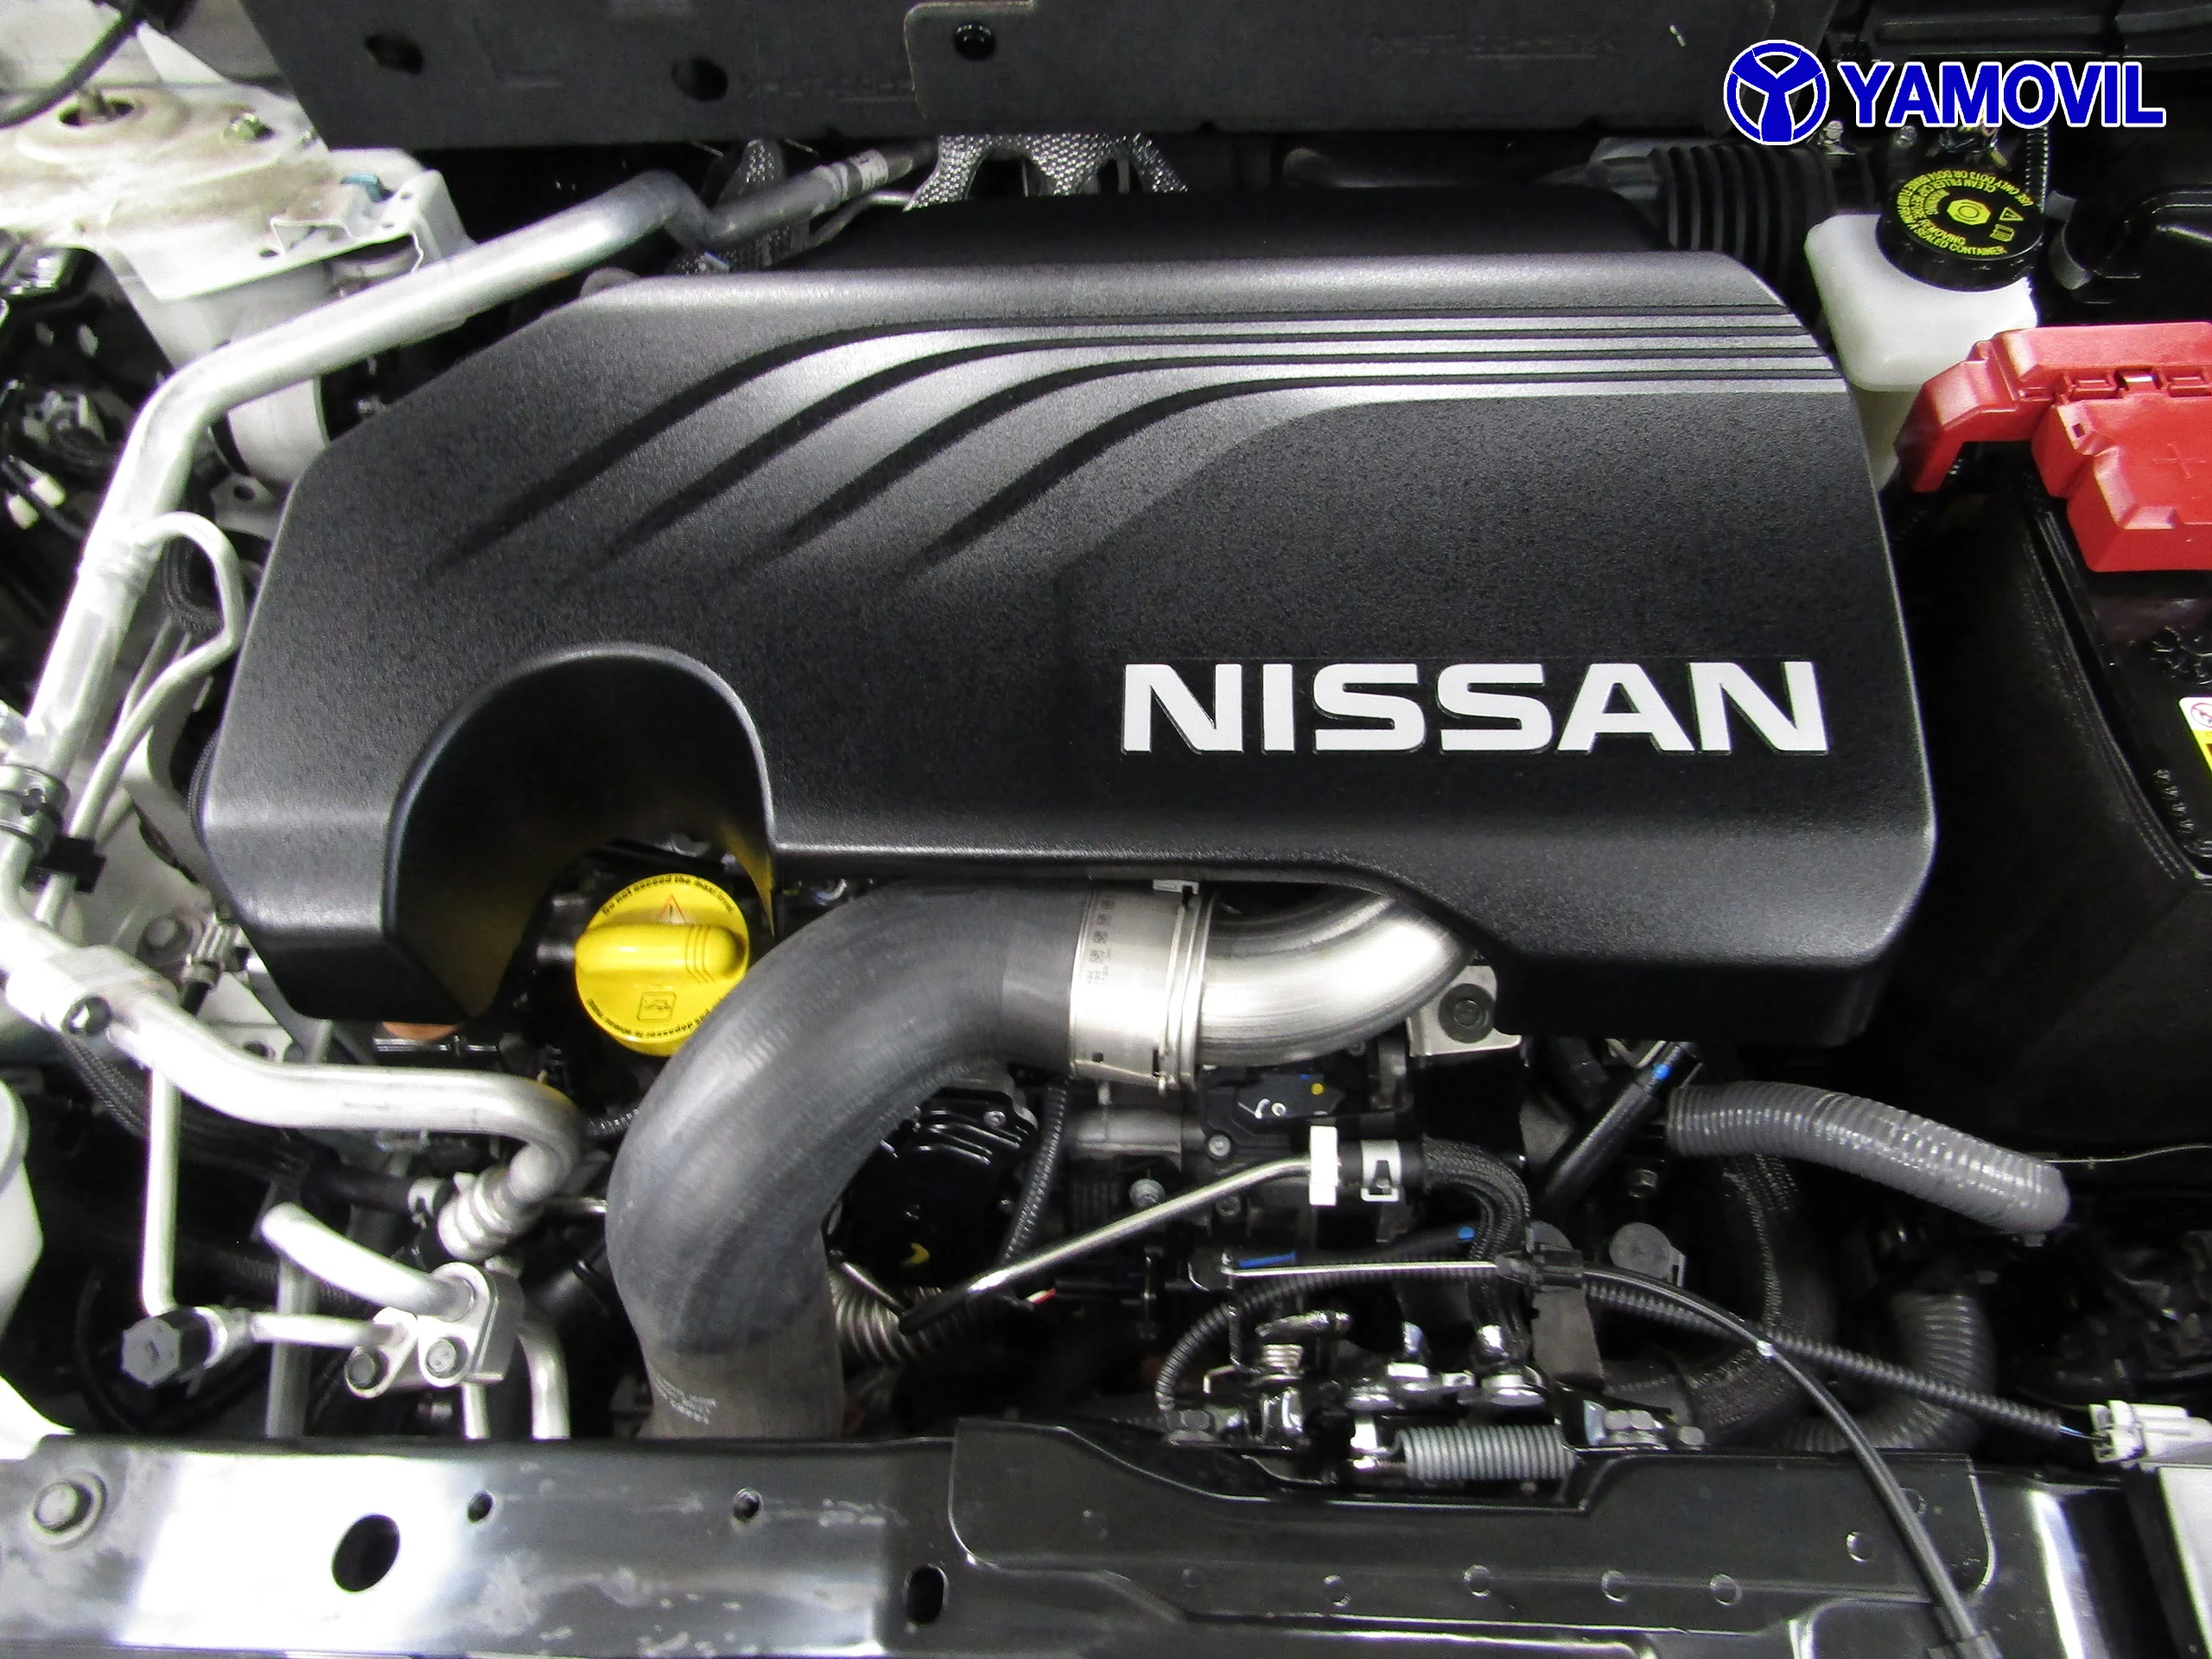 Nissan X-Trail 2.0 DCI 4X4 XTRONIC NCONNECTA 5P - Foto 8